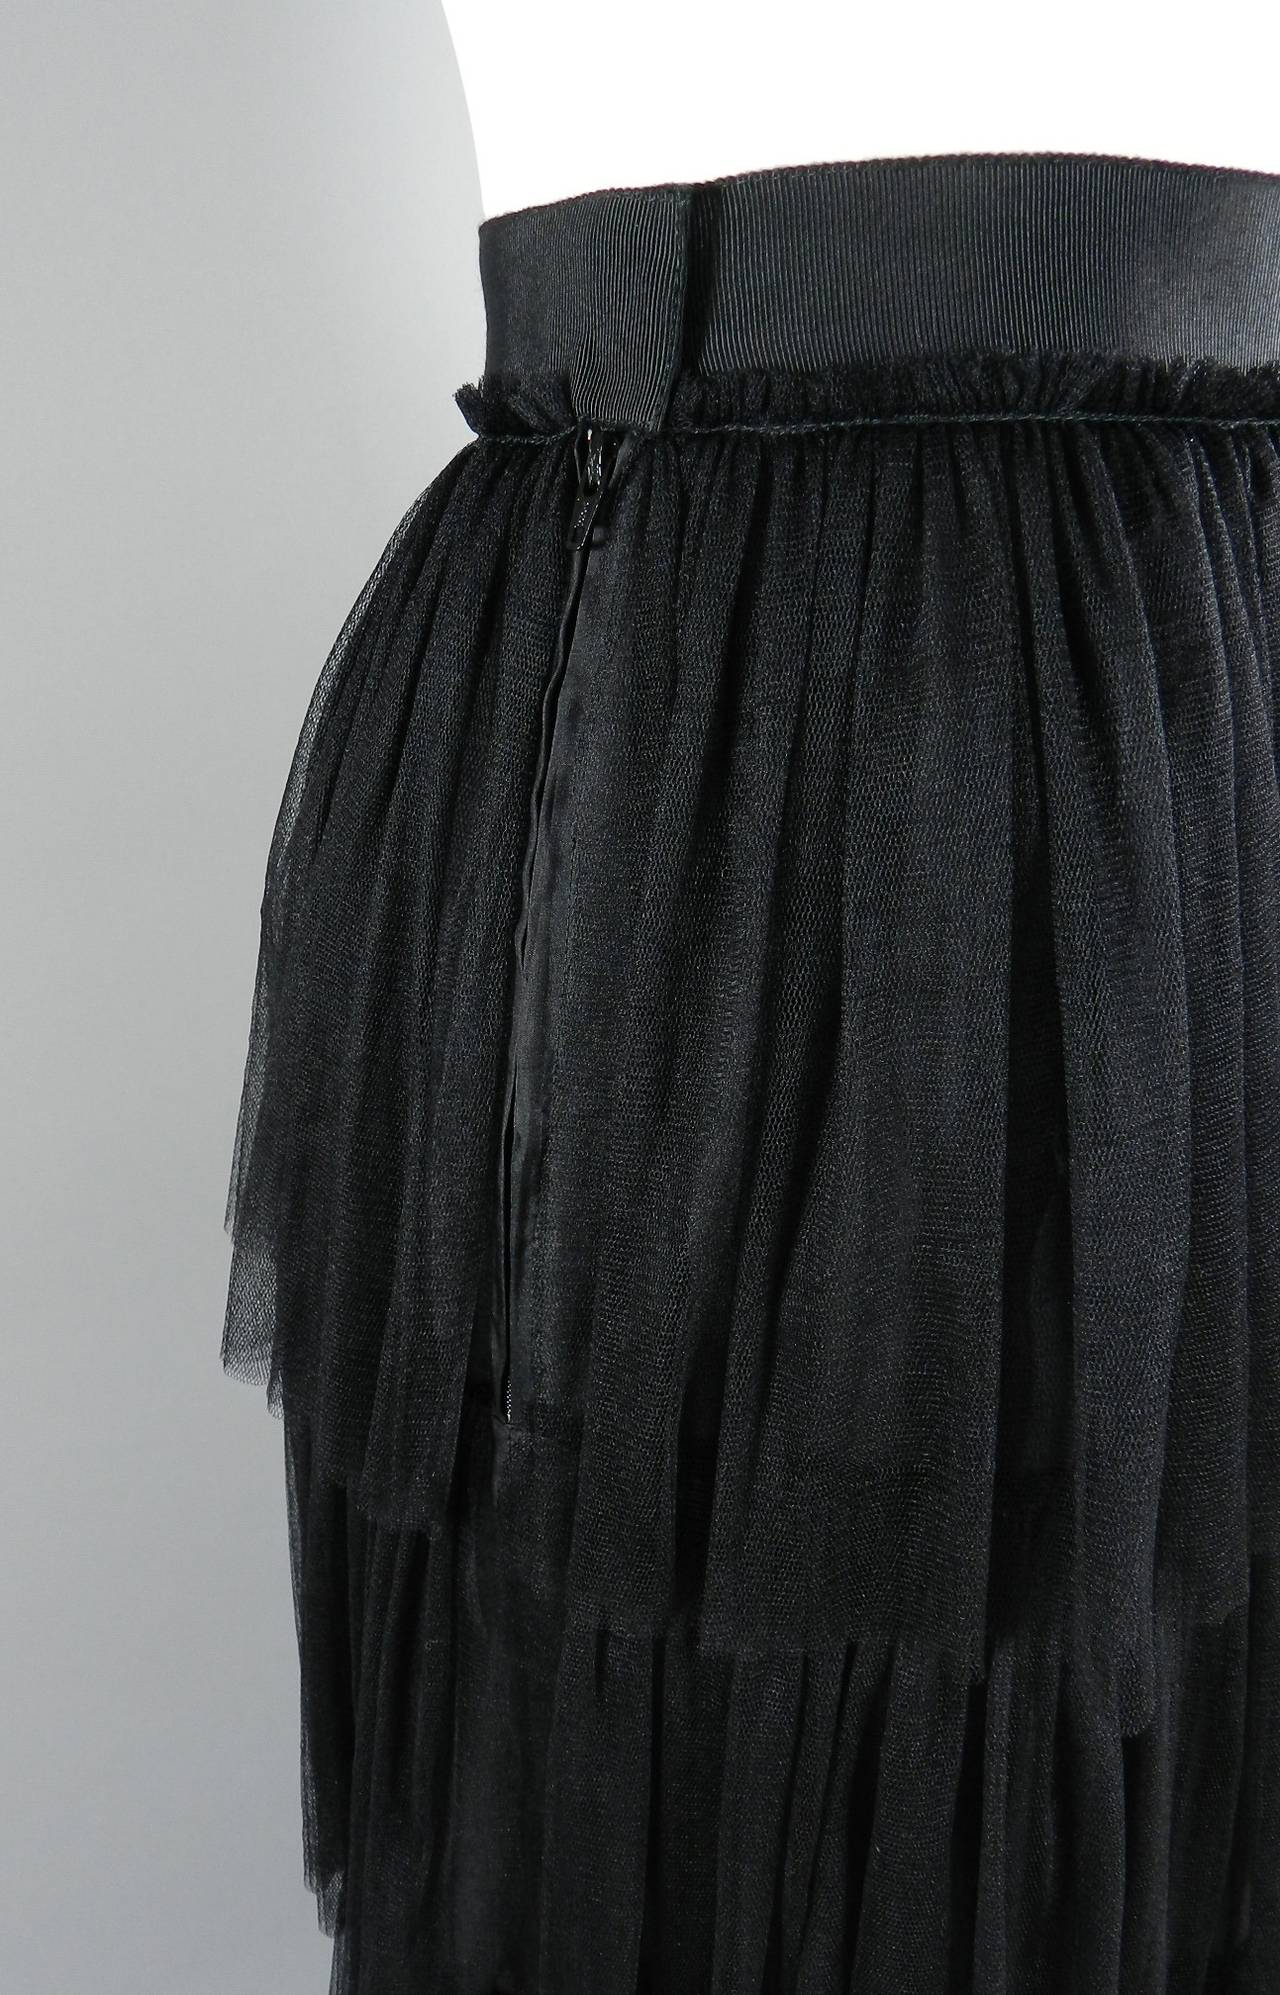 Lanvin 2009 Runway Black Tulle Long Evening Skirt 2